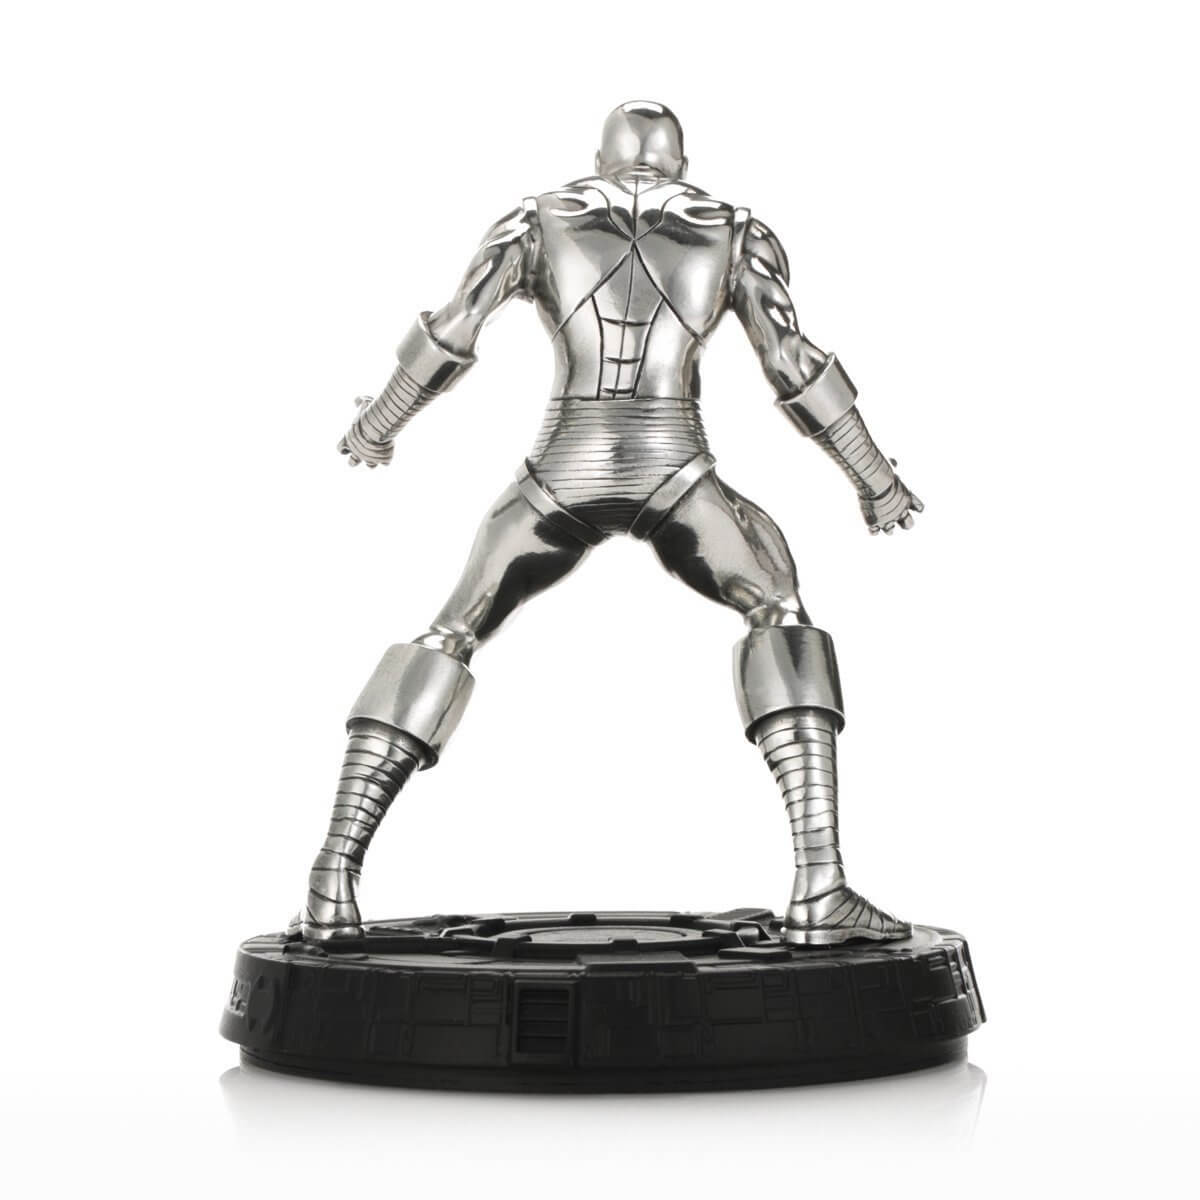 Iron Man Invincible Figurine - Marvel Collectible Statue